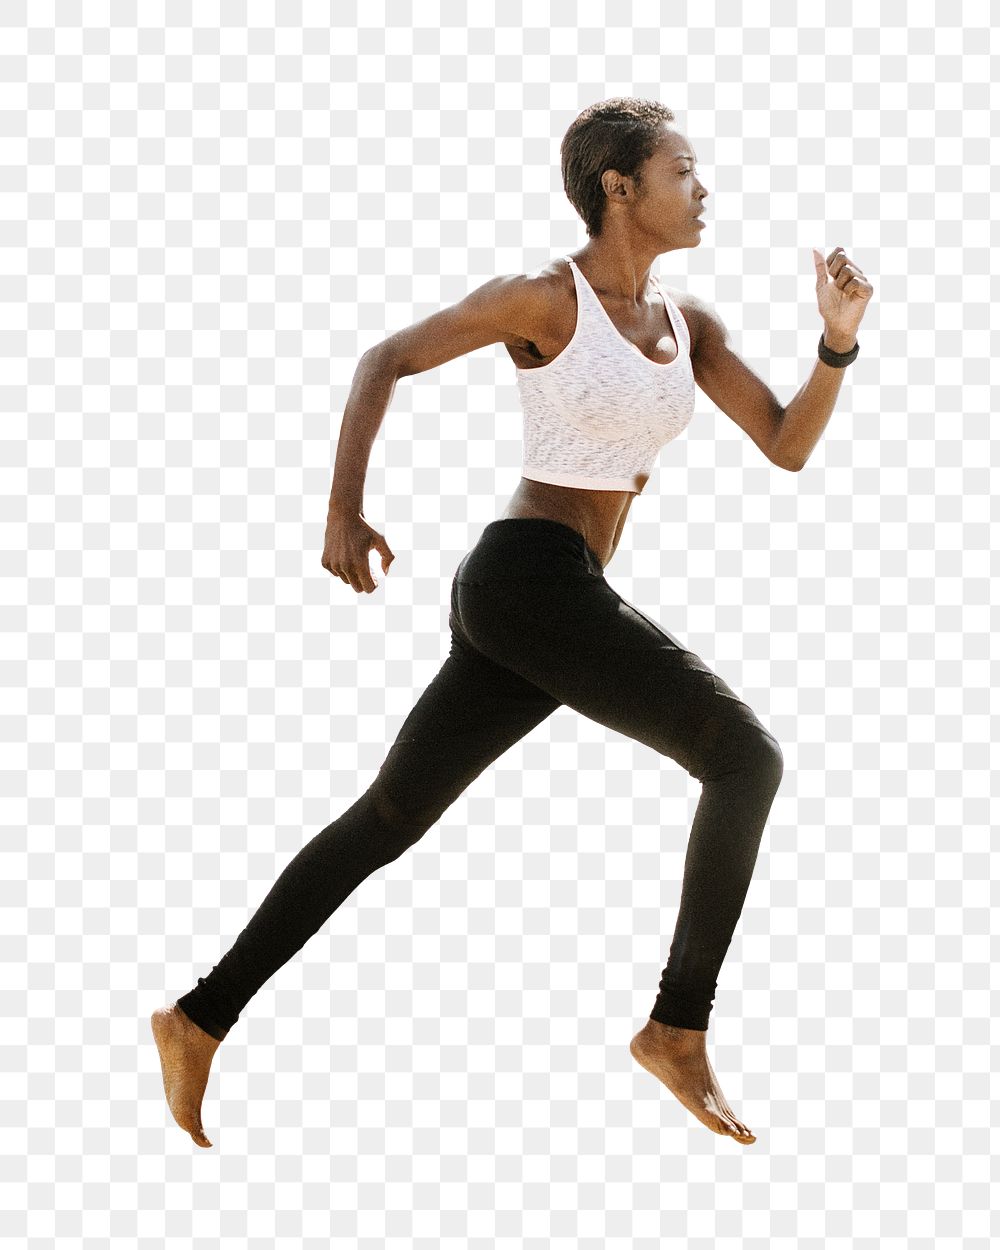 Black woman running png sticker, transparent background